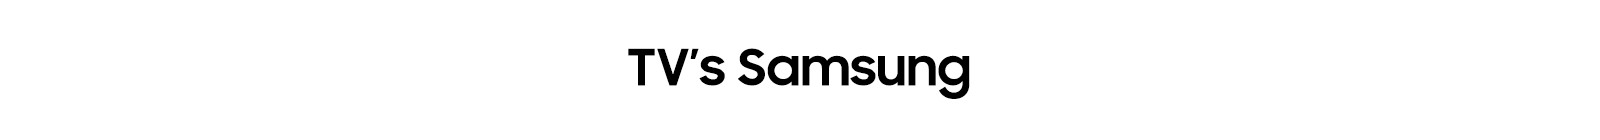 TV's Samsung